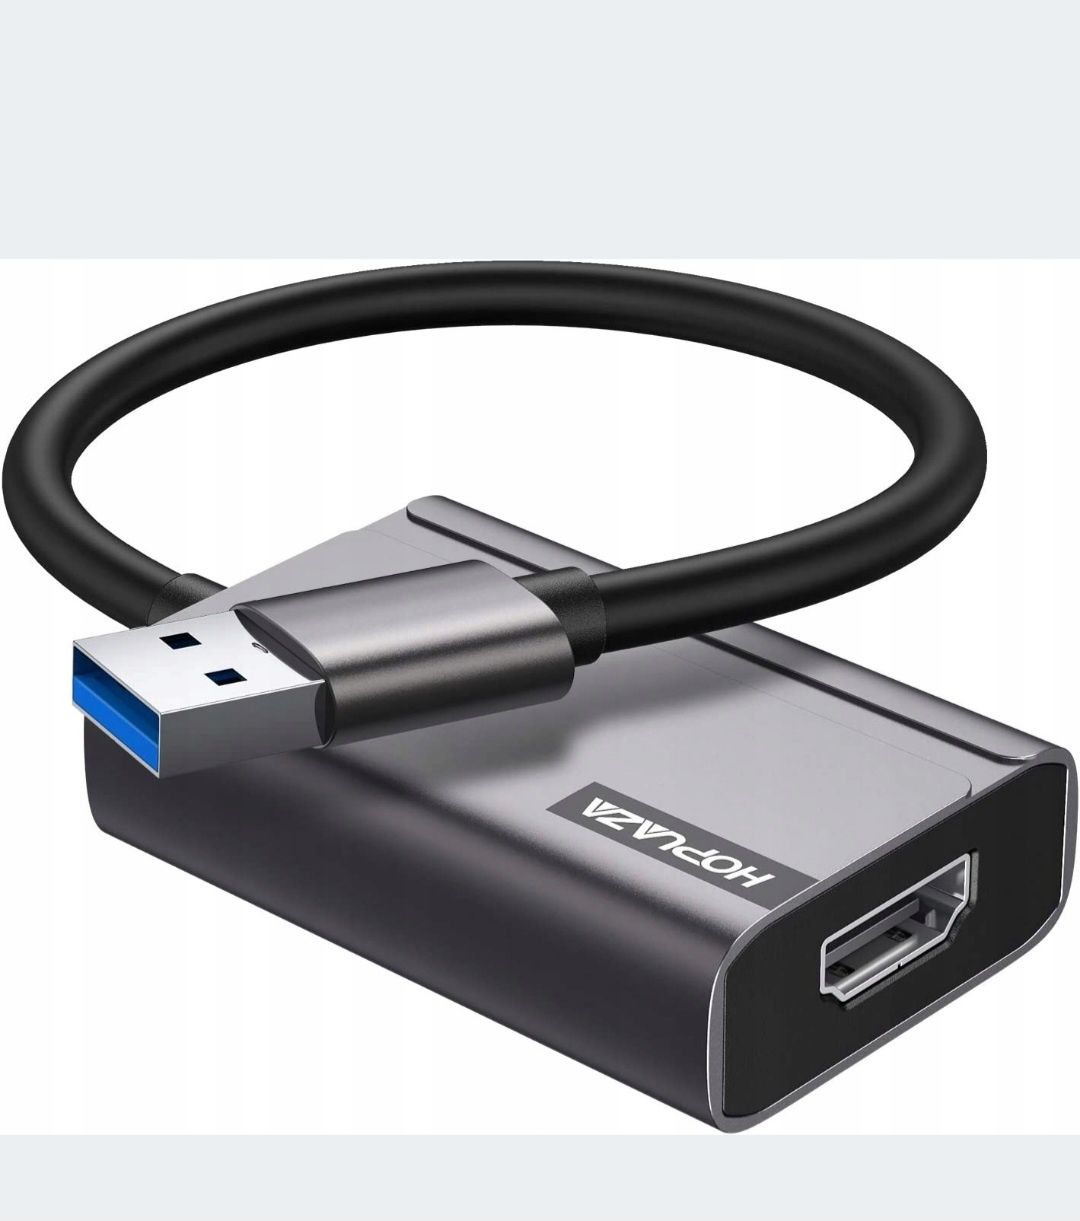 HOPLAZA Adapter USB do HDMI kod C10